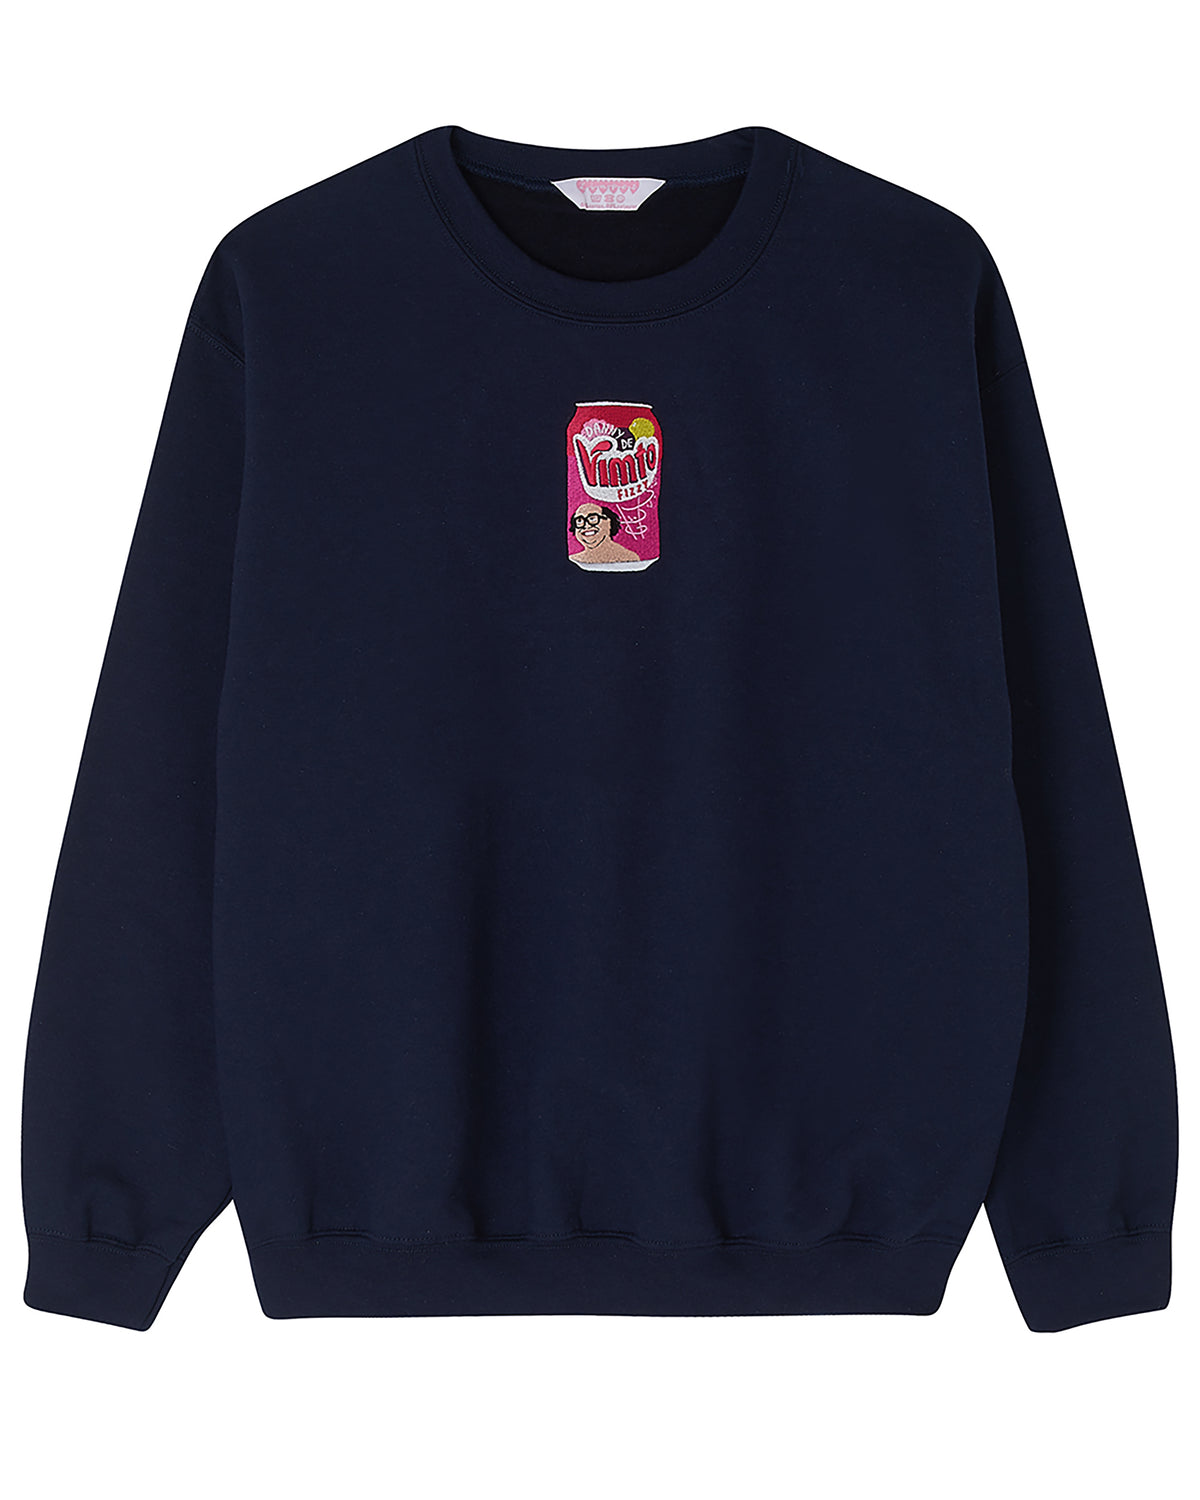 Danny DeVimto Embroidered Sweatshirt